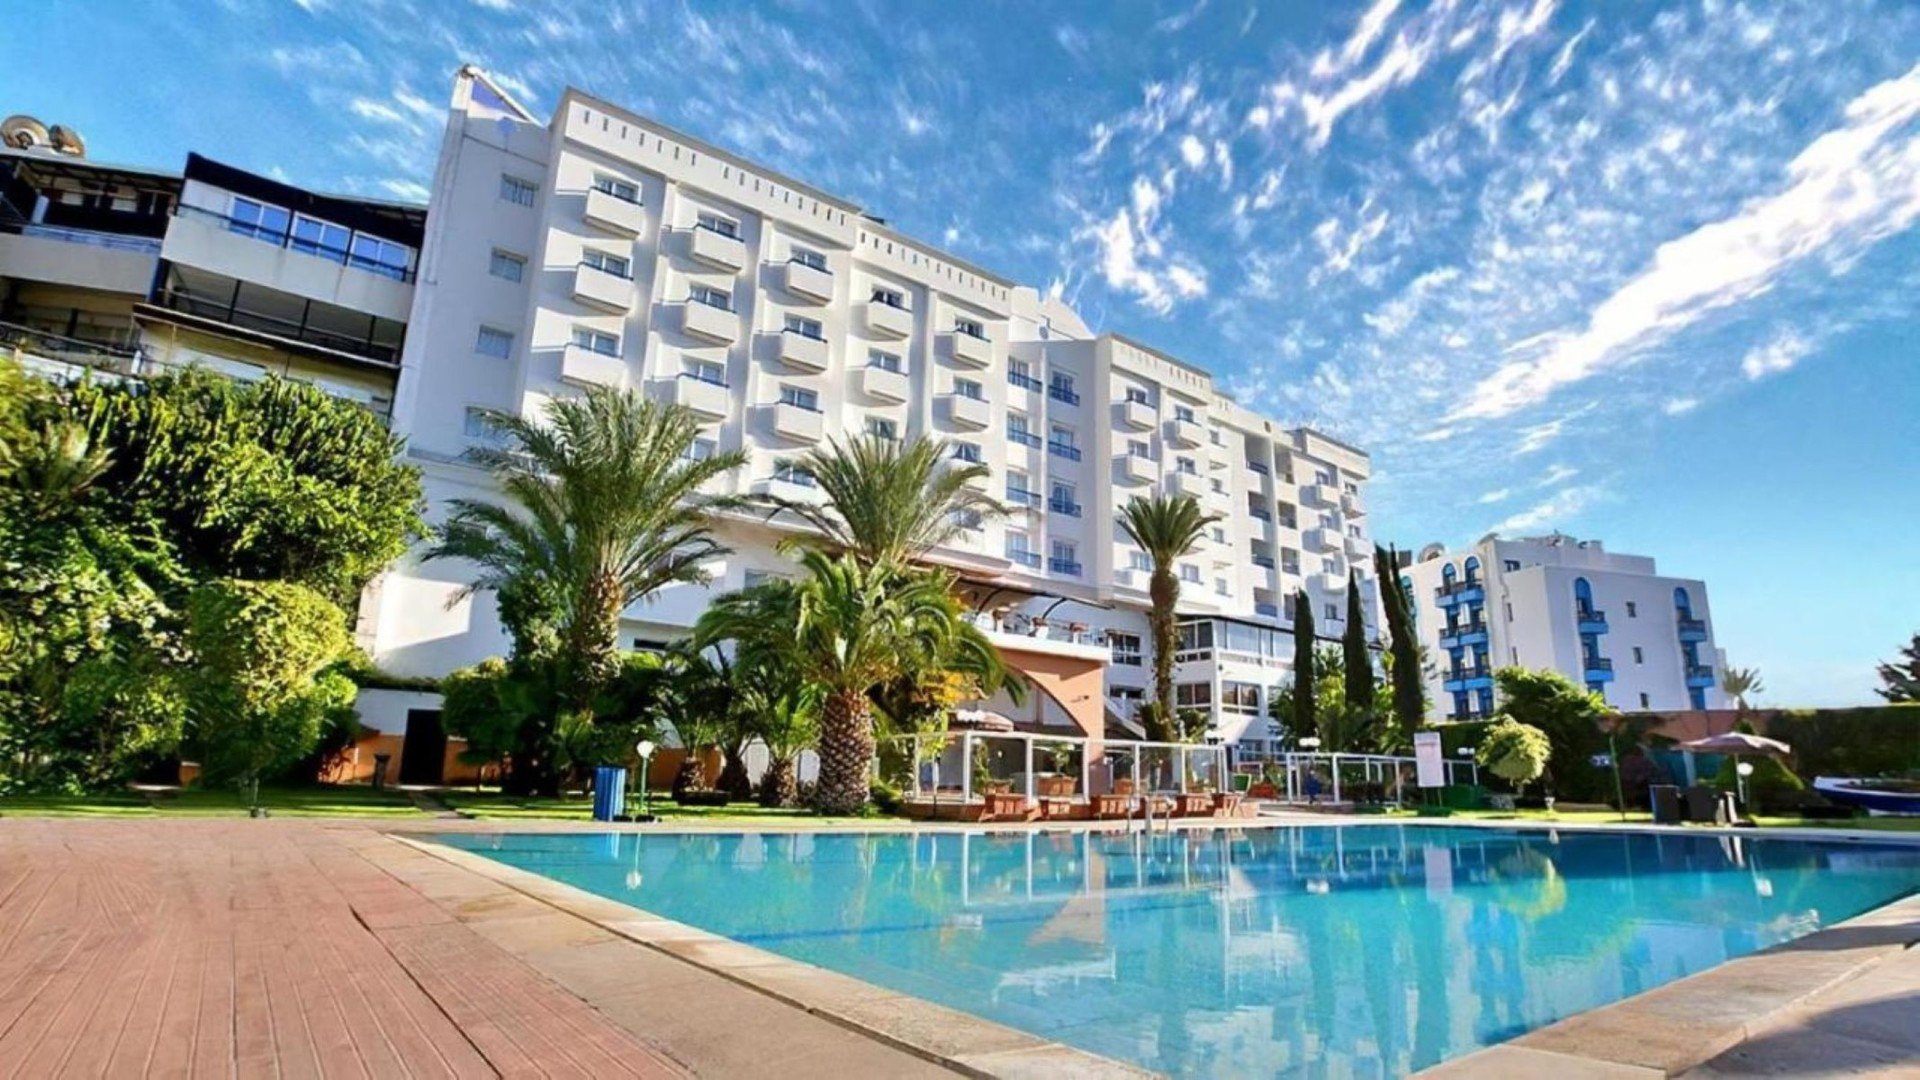 Tildi Hotel Agadir